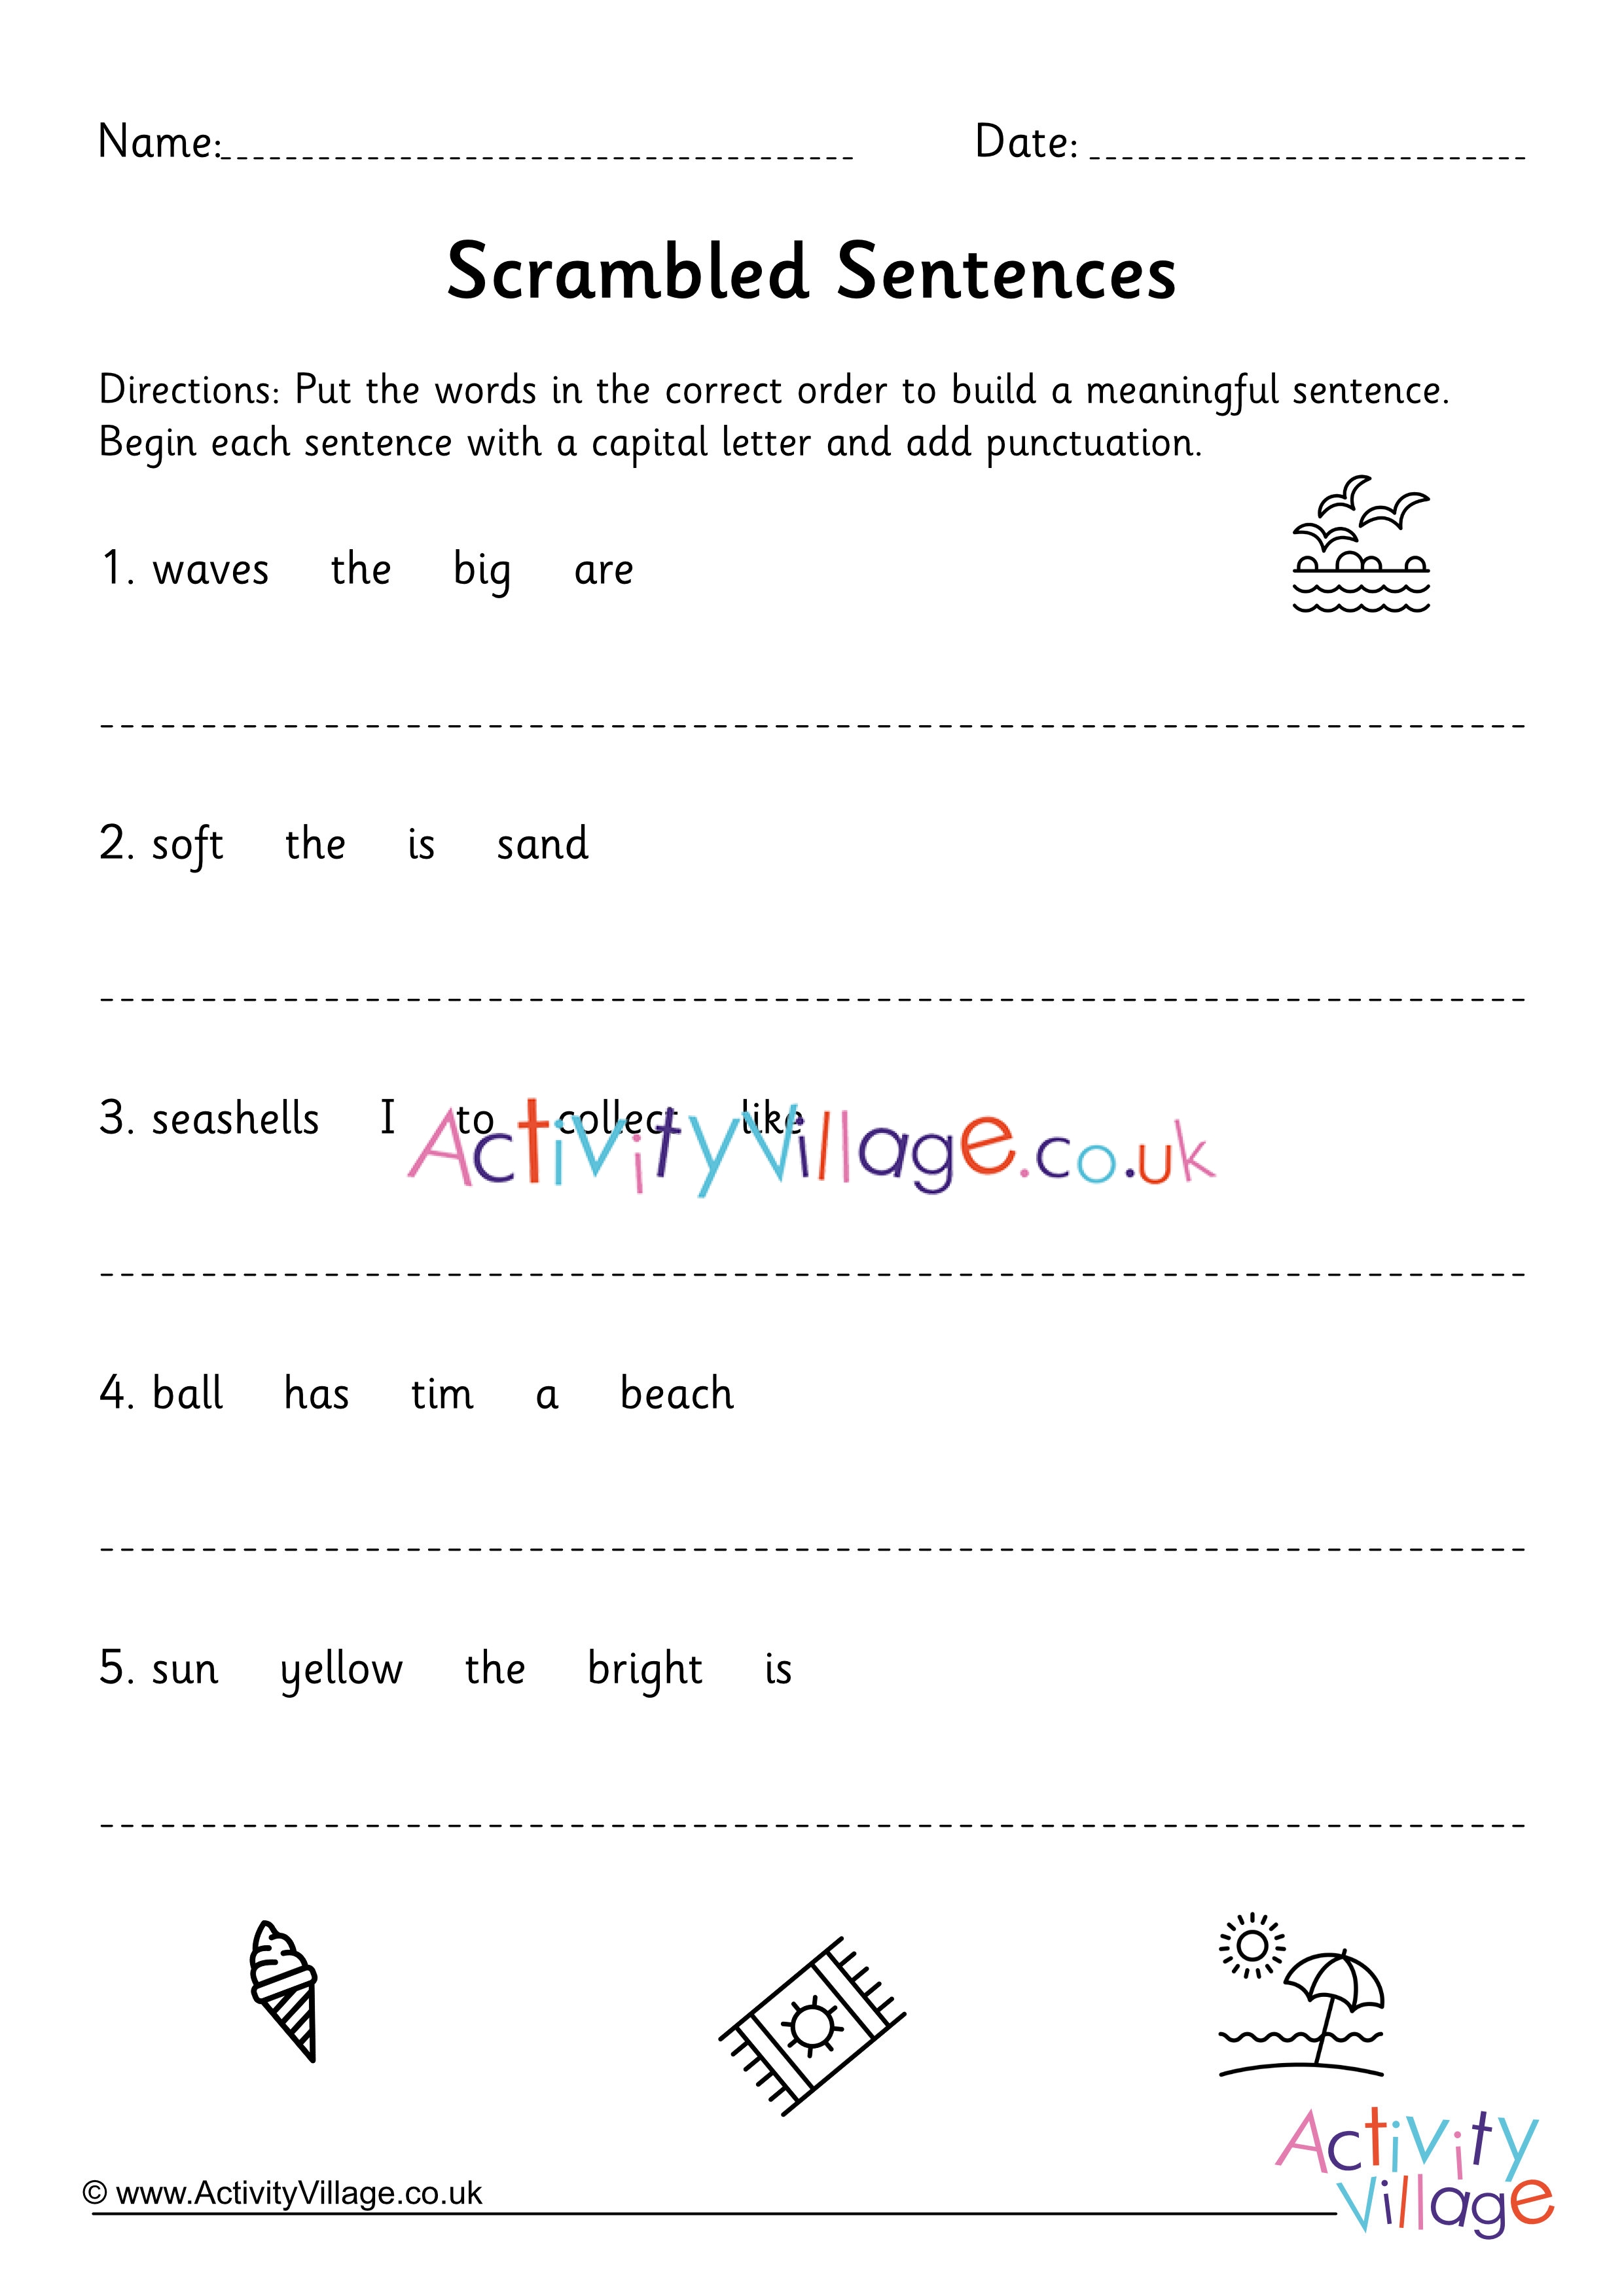 scrambled-sentences-worksheets-free-download-goodimg-co